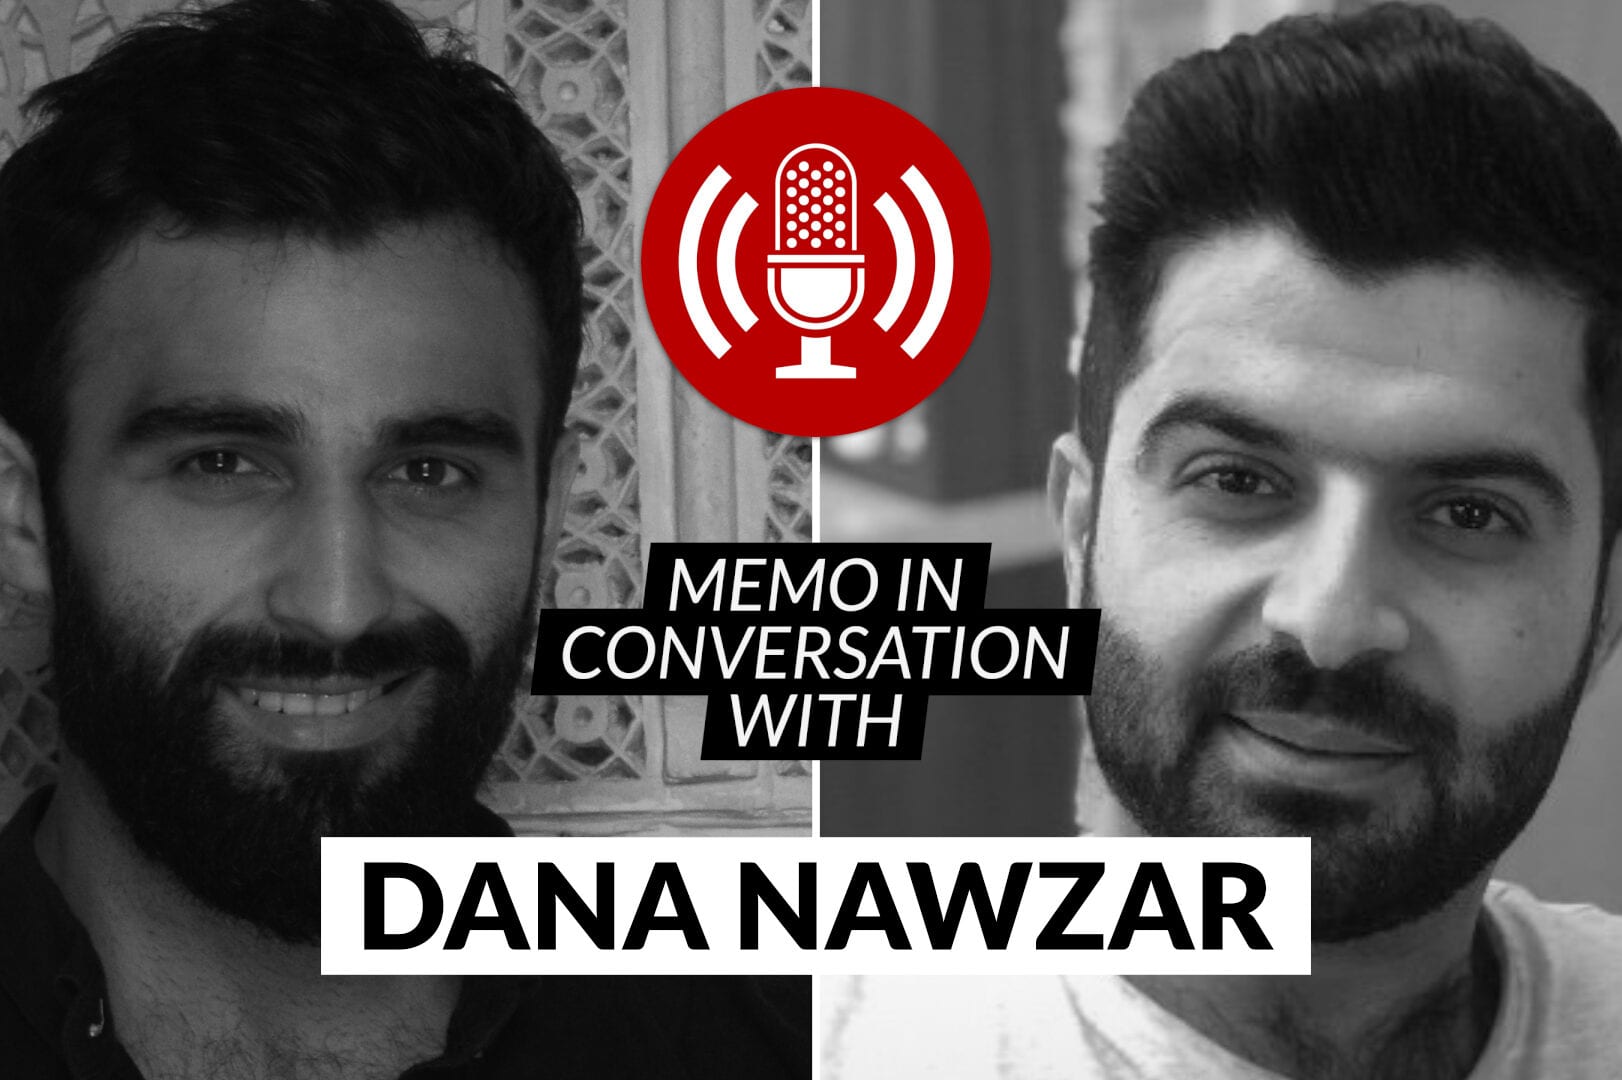 MEMO in conversation with: Dana Nawzar